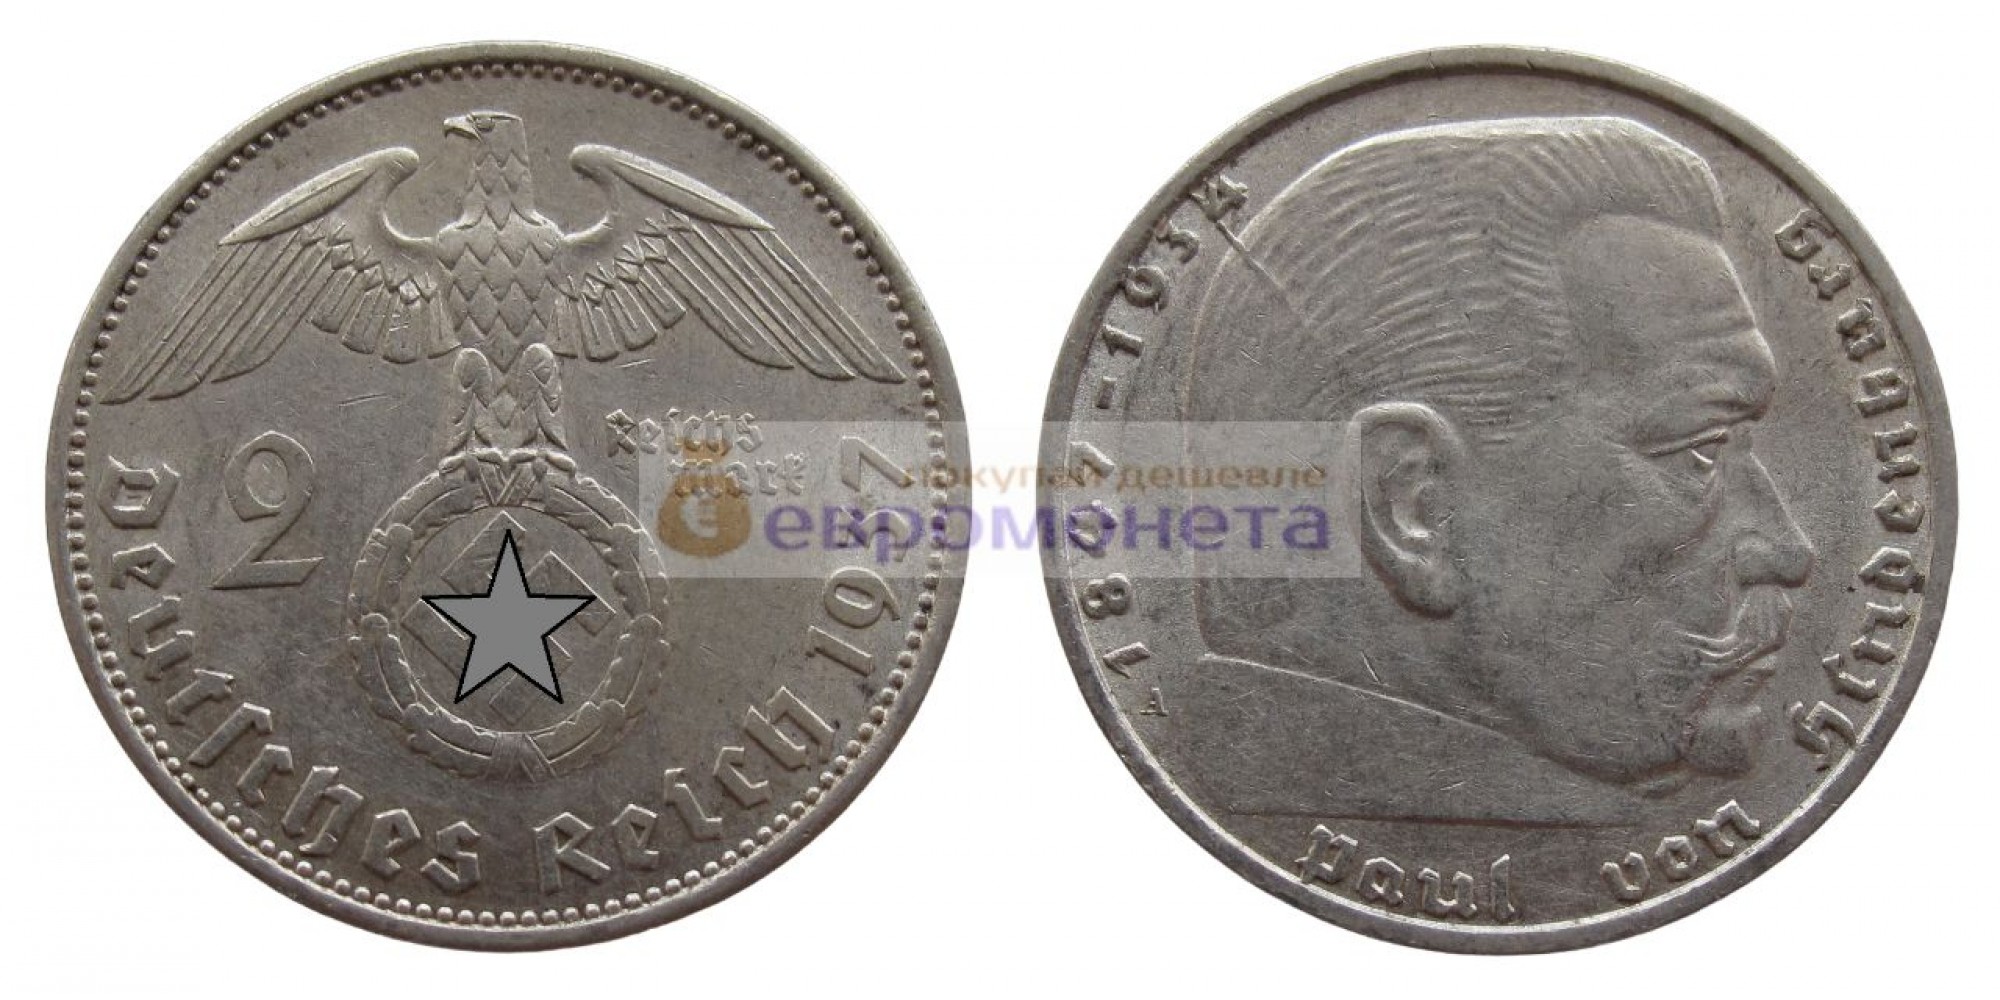 Германия - Третий рейх 2 рейхсмарки (марки) 1937 год А. Серебро